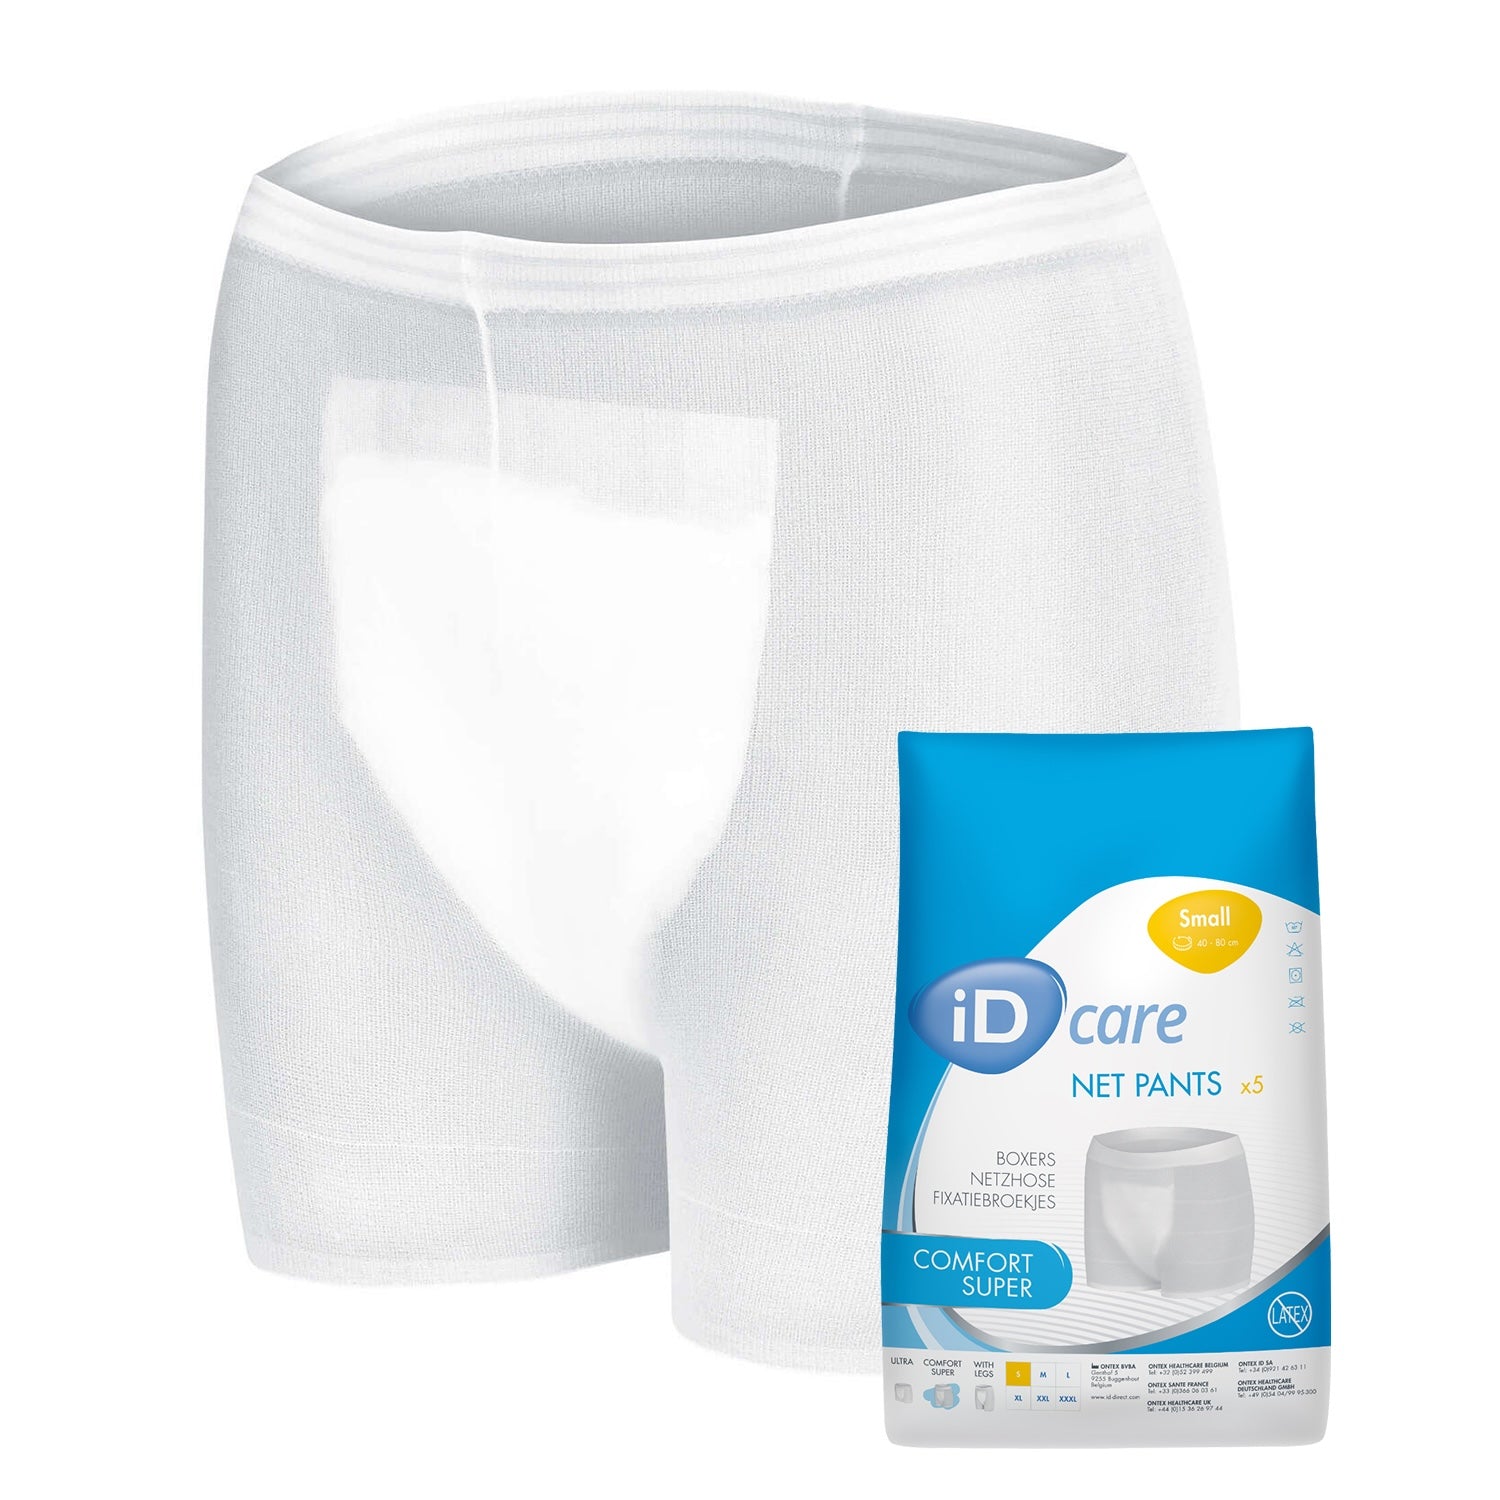 iD Care Net Pants Comfort Super, Small